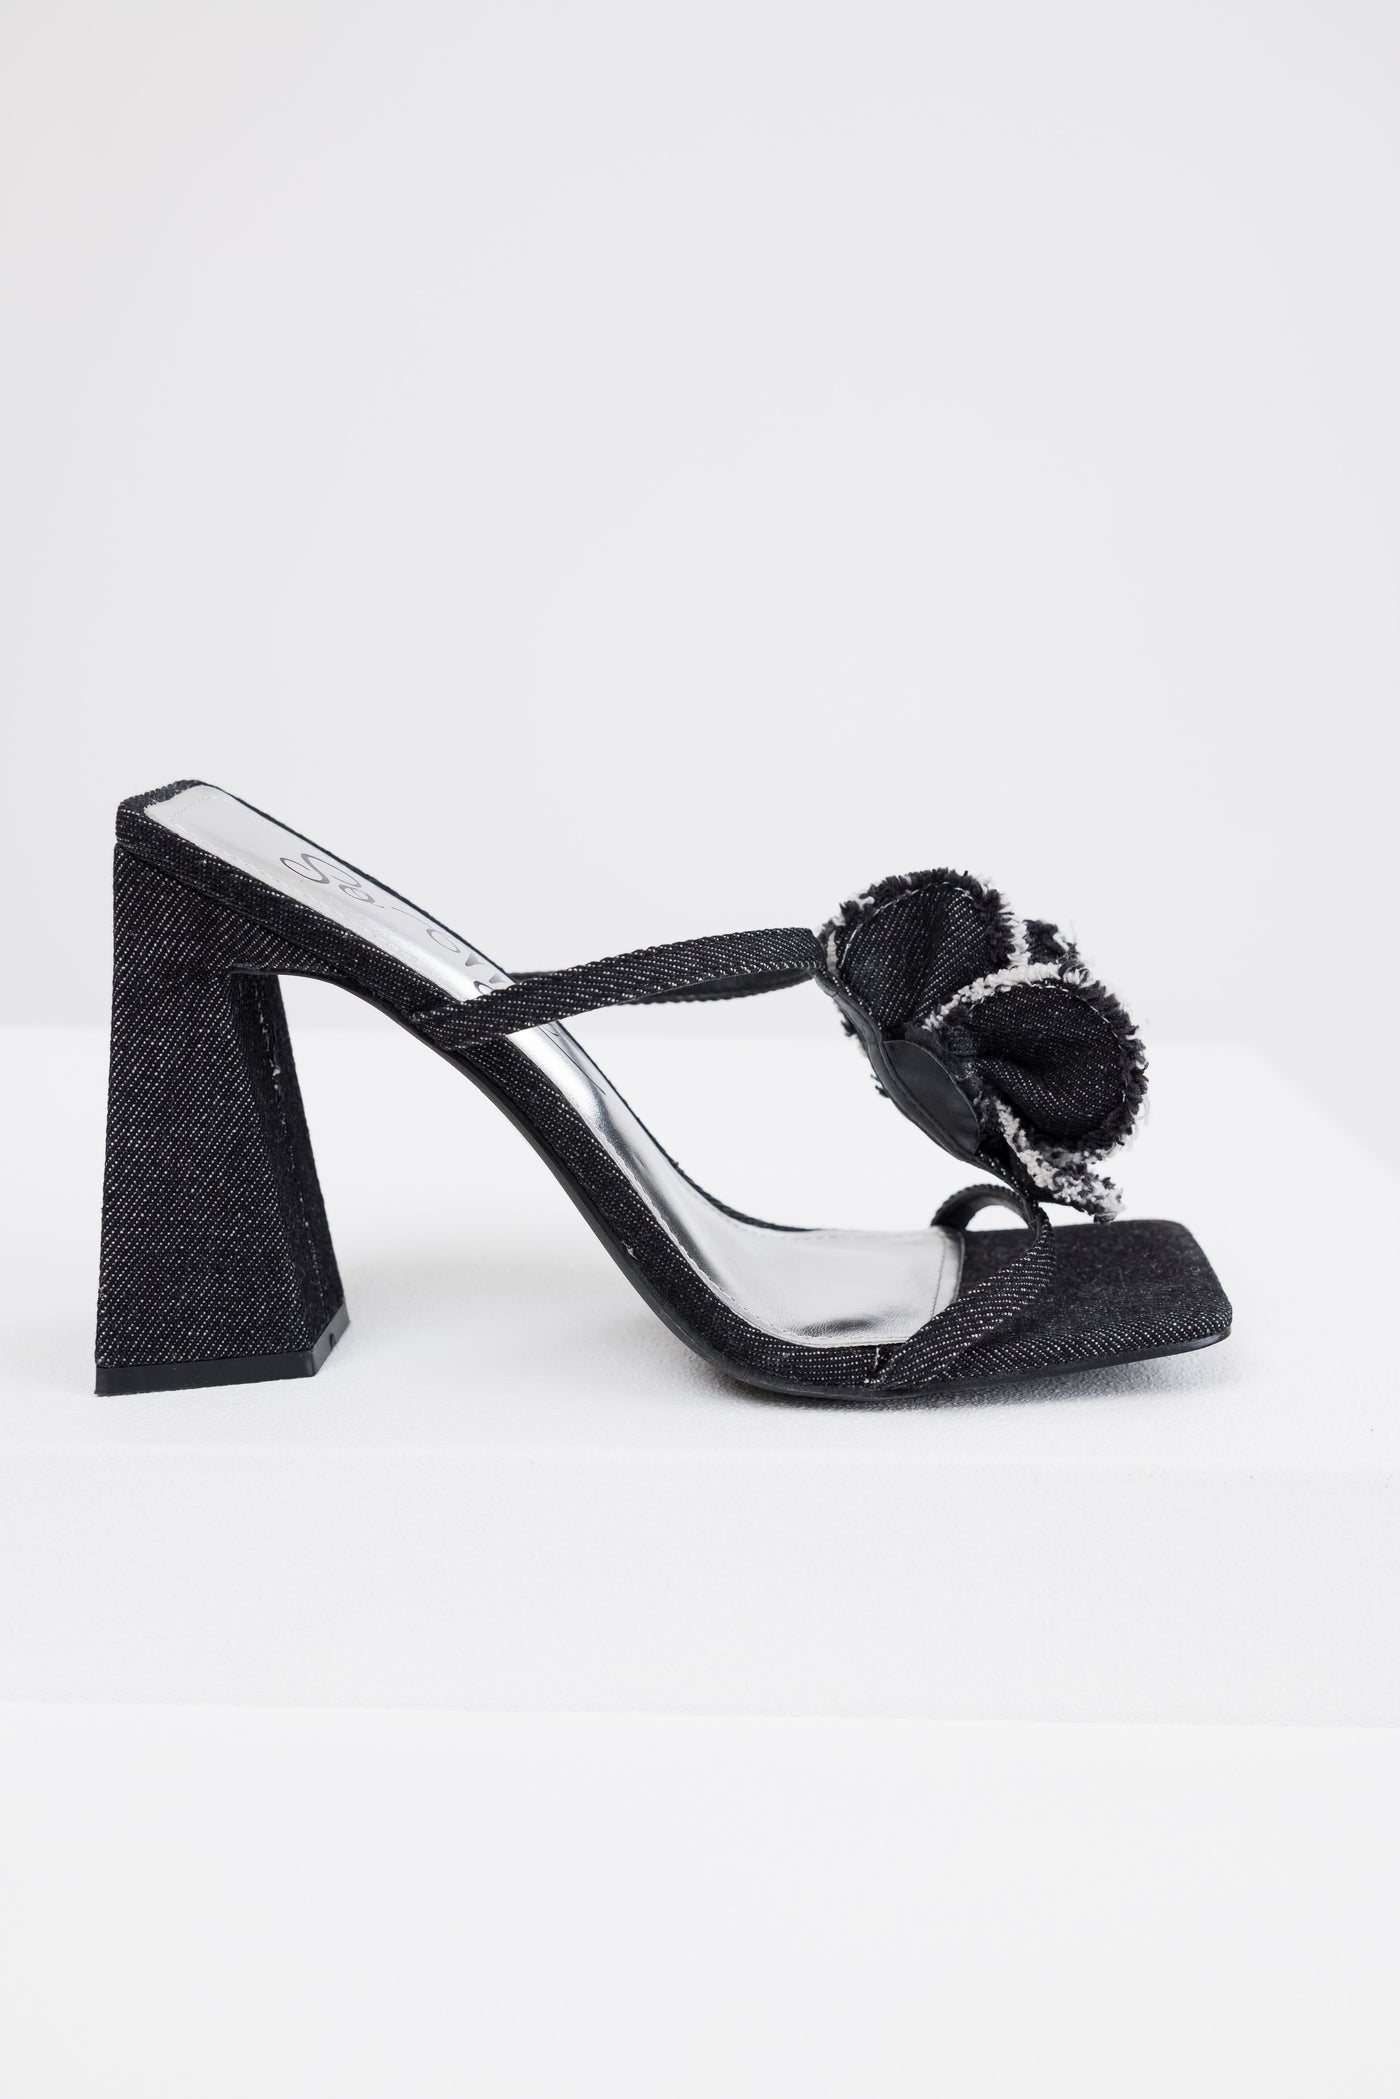 Black Denim Flower Detail Square Toe Heels